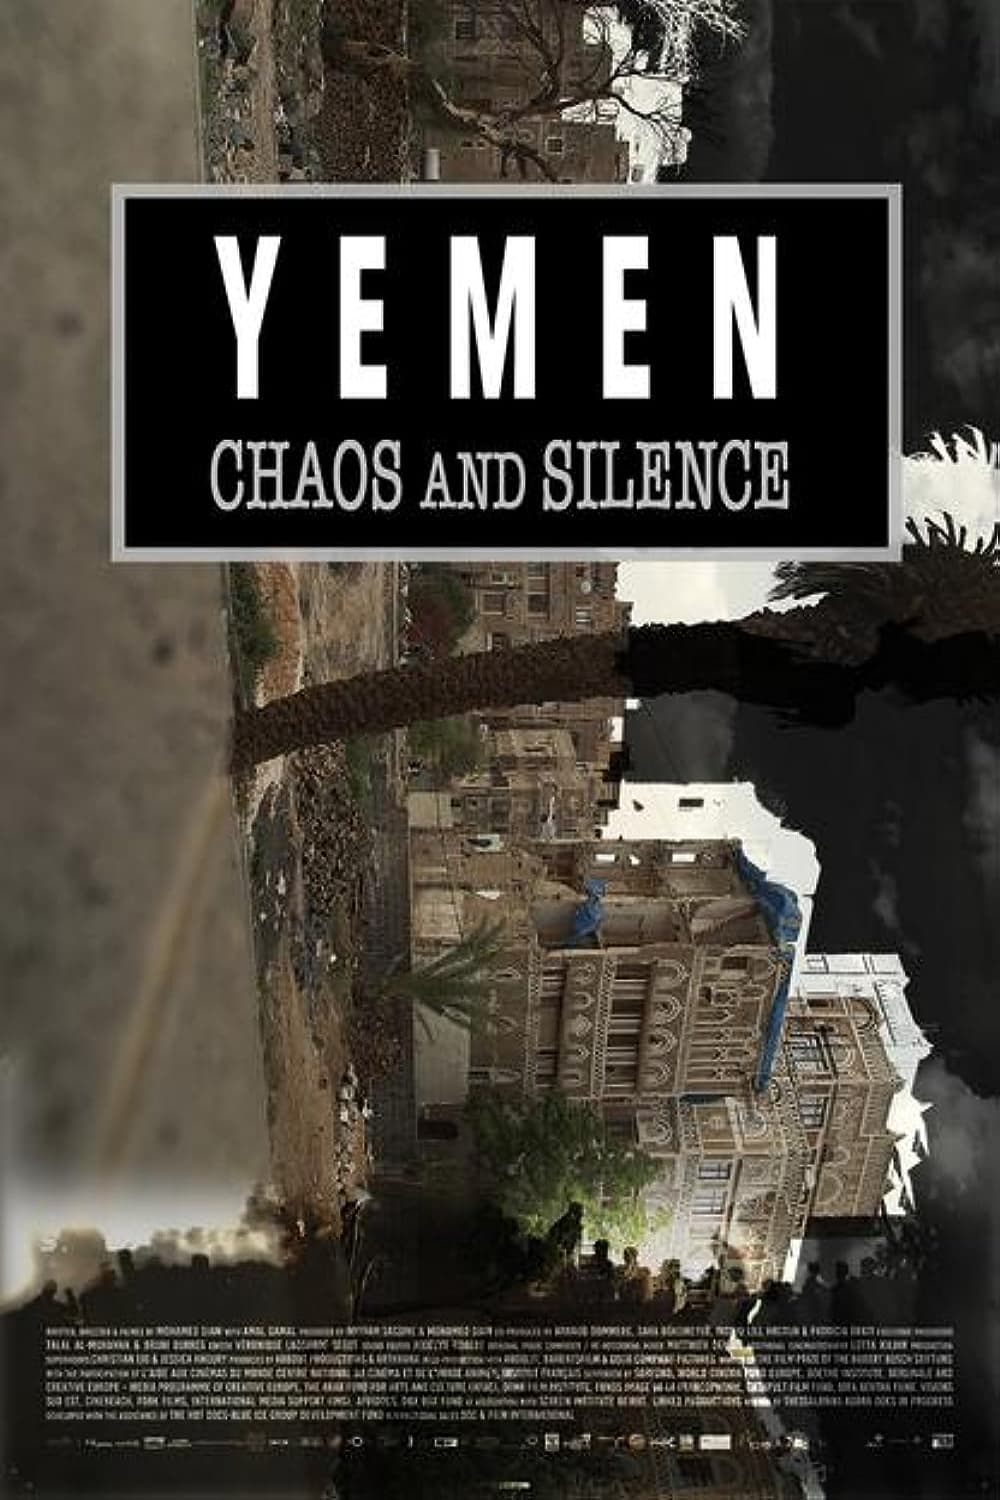 Yemen, Chaos and Silence